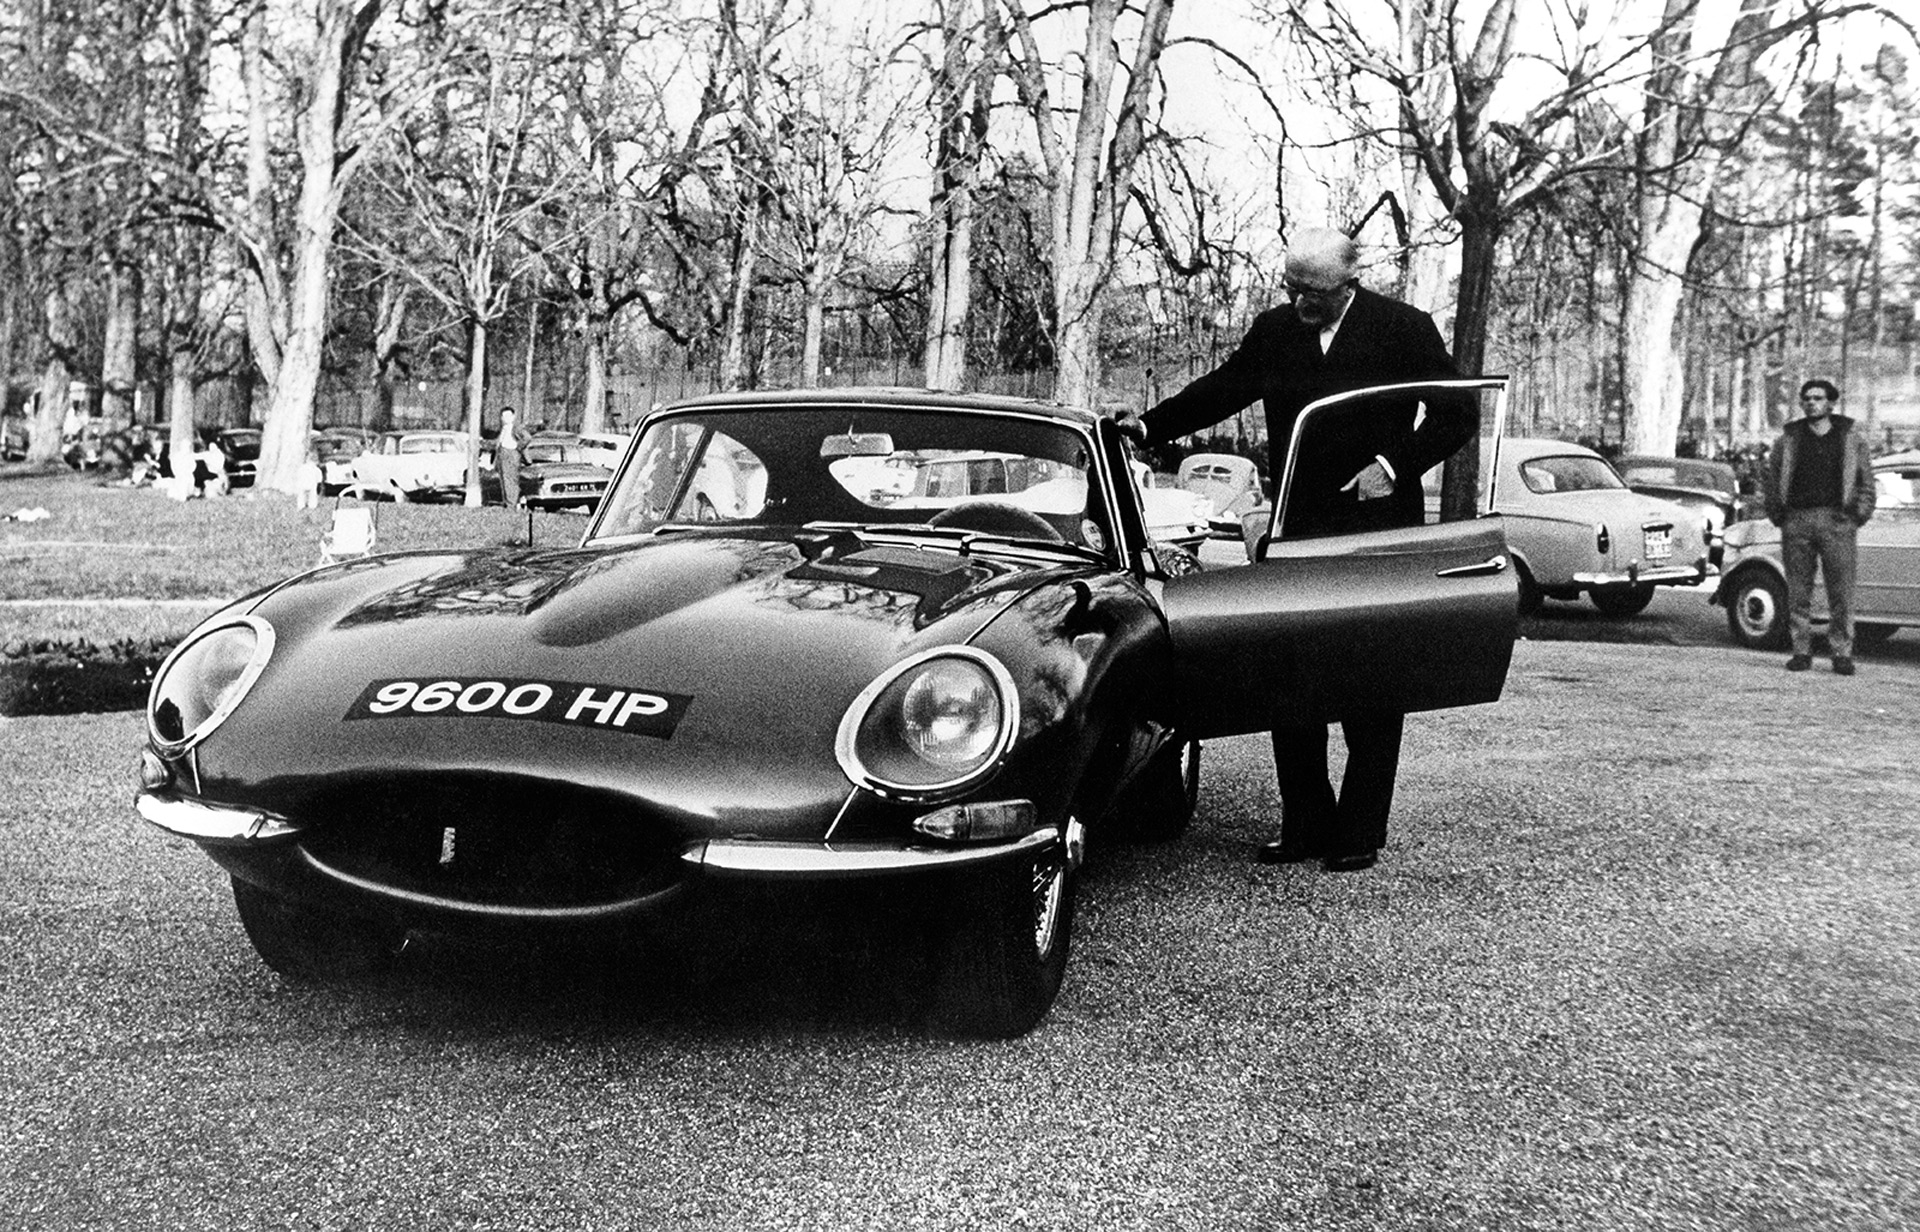 Jaguar founder William Lyons with the 1961 Jaguar E-Type registered 9600 HP